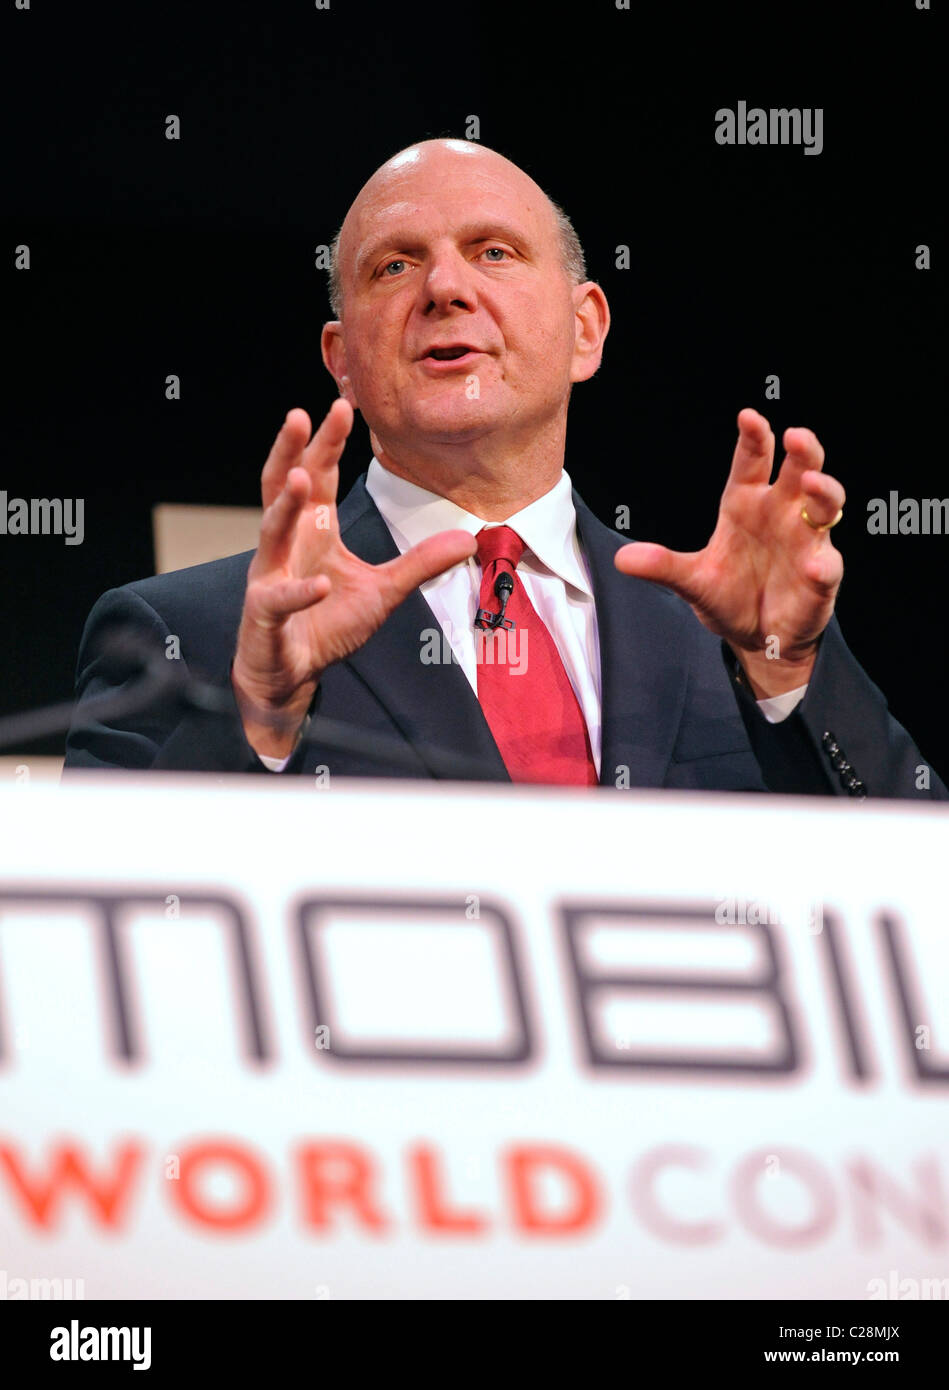 Steve Ballmer, Microsoft CEO speaking at Mobile World Congress in Barcelona 2011 Stock Photo